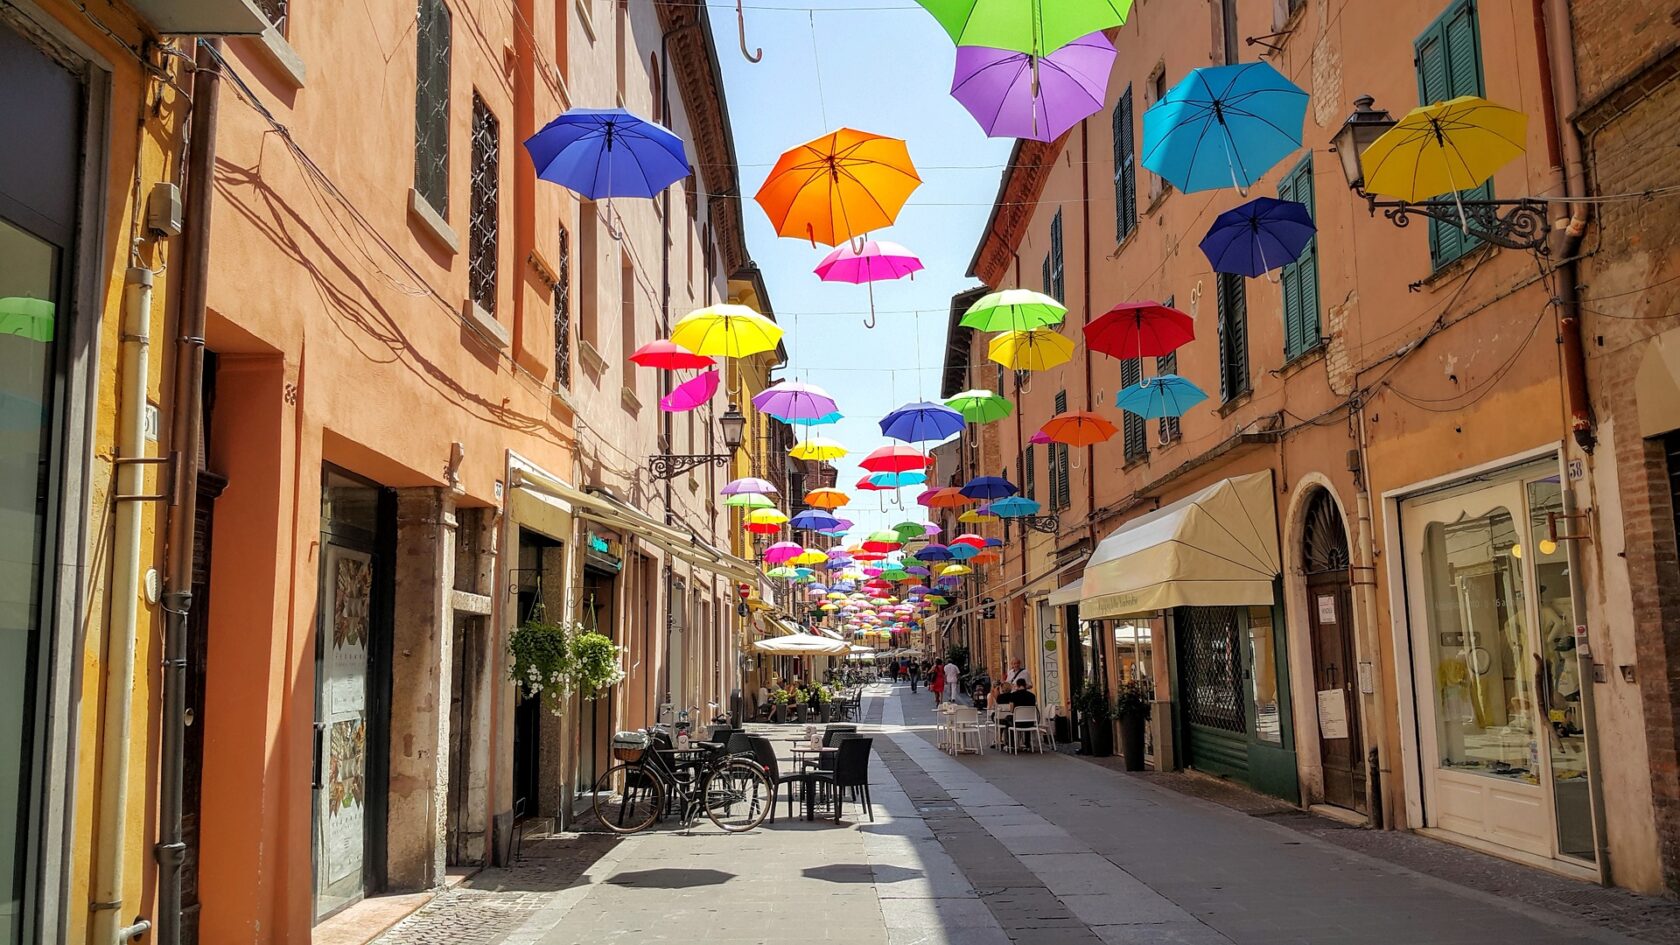 Colorful umbrellas hanging above a street in Ferrara, Italy (an Atlantis site).